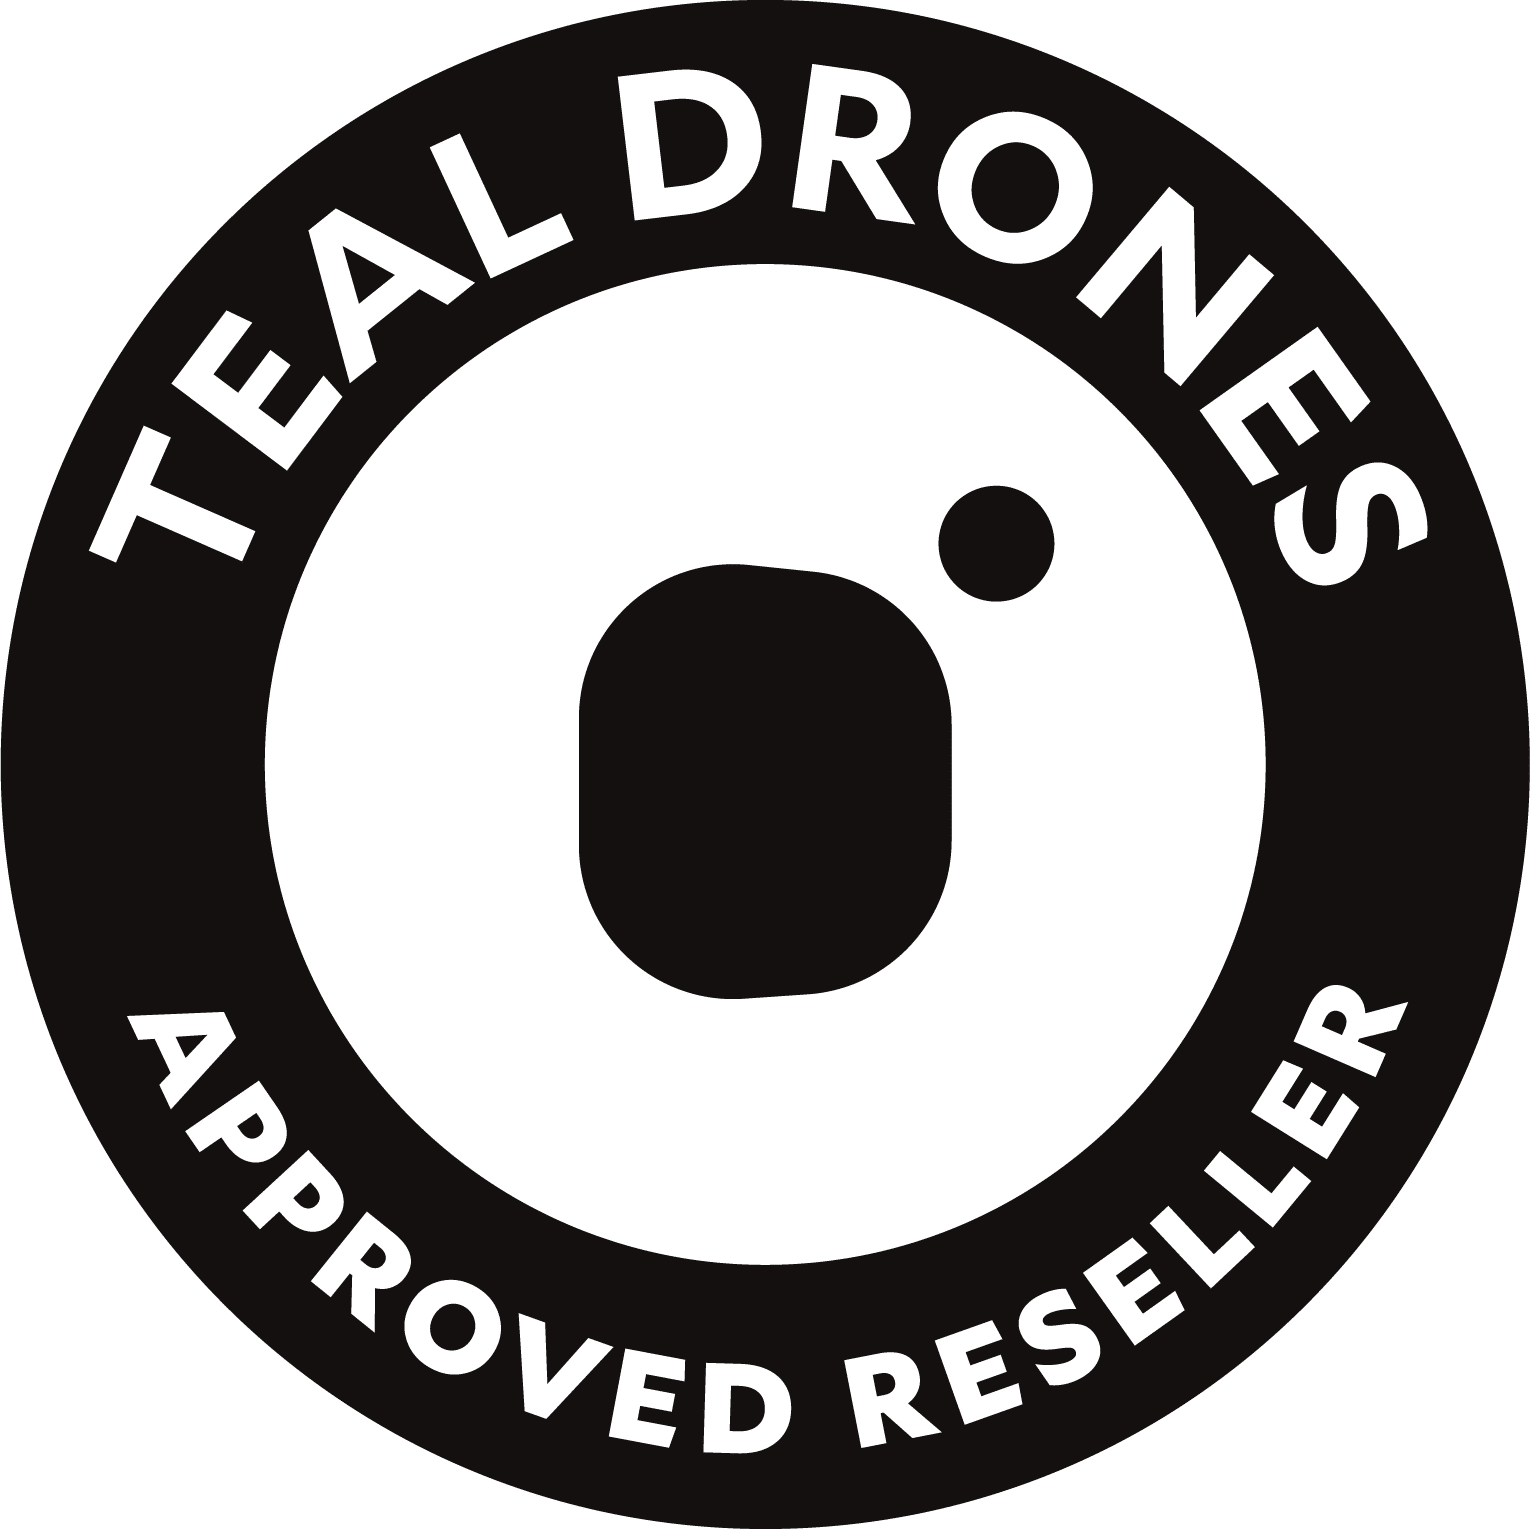 Teal Drones